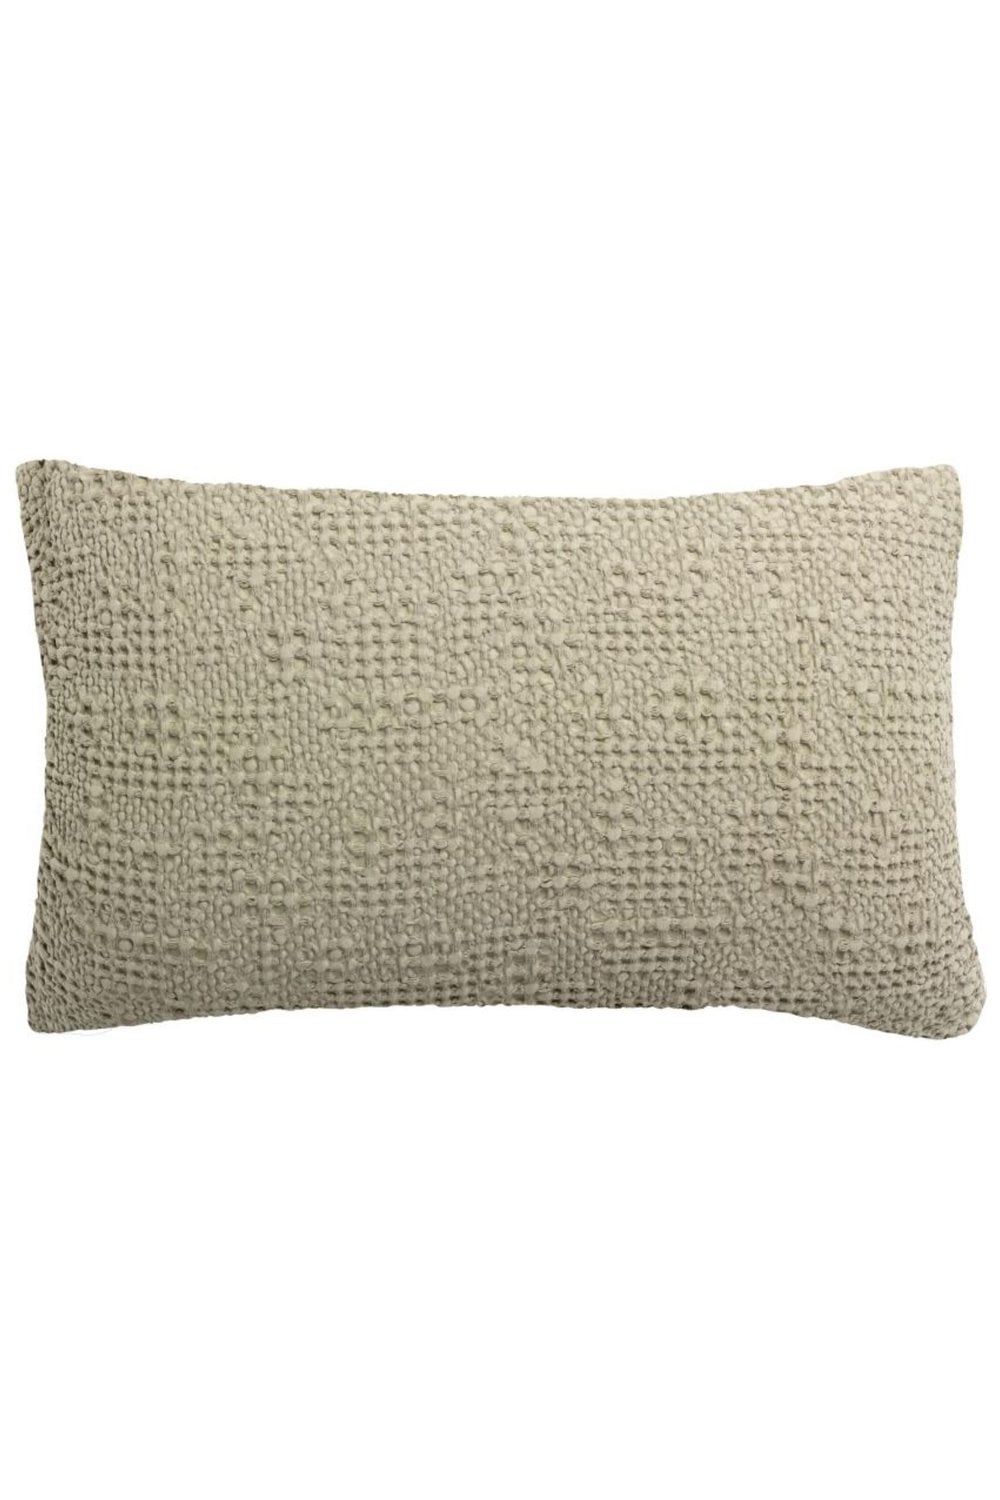 Vivaraise Tana Rectangle Stonewashed Cushion Cover In Pinede